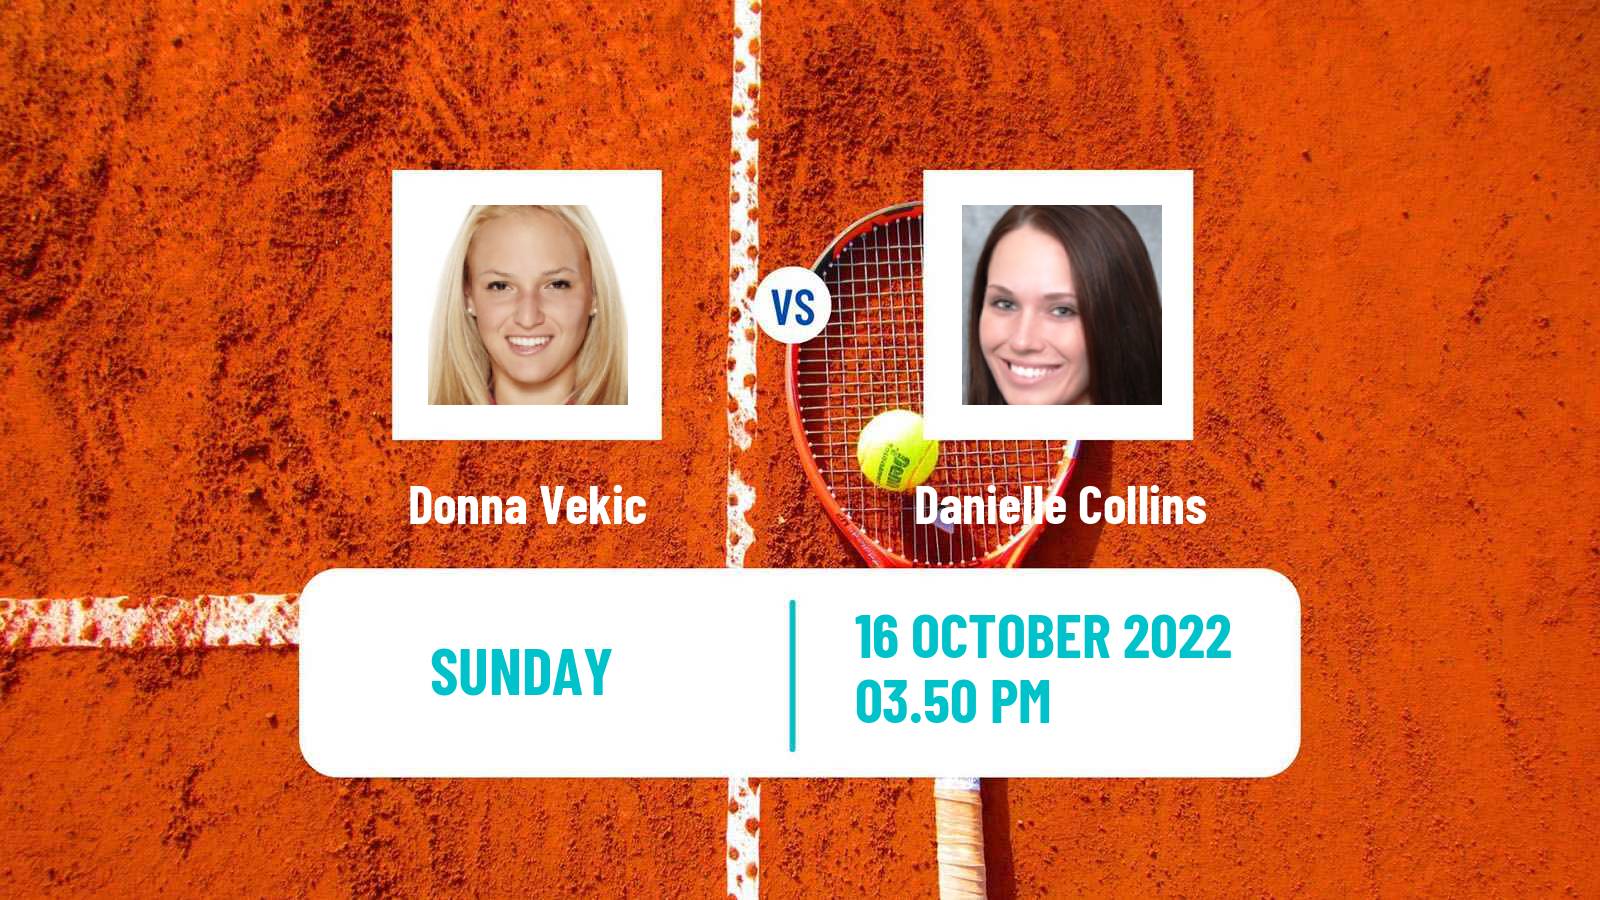 Tennis WTA San Diego Donna Vekic - Danielle Collins